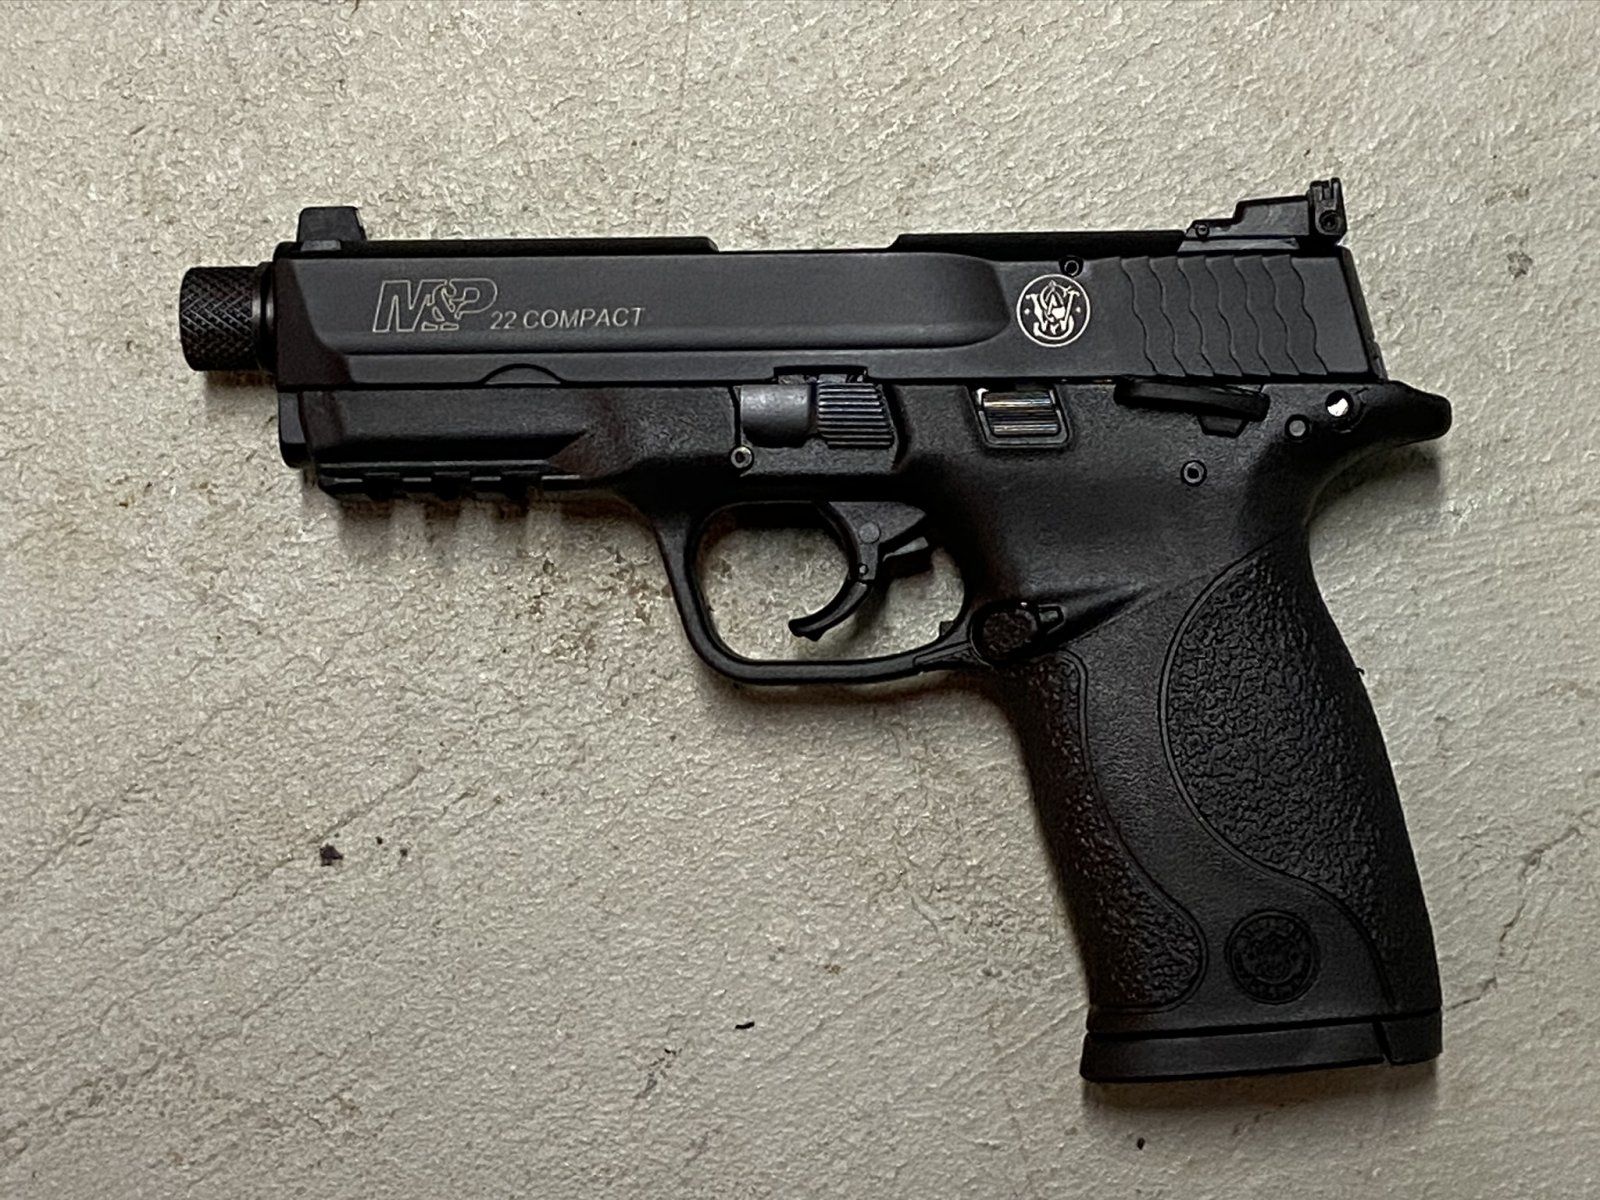 pistol-22lr-smithwesson-mp-22-compact.jpg